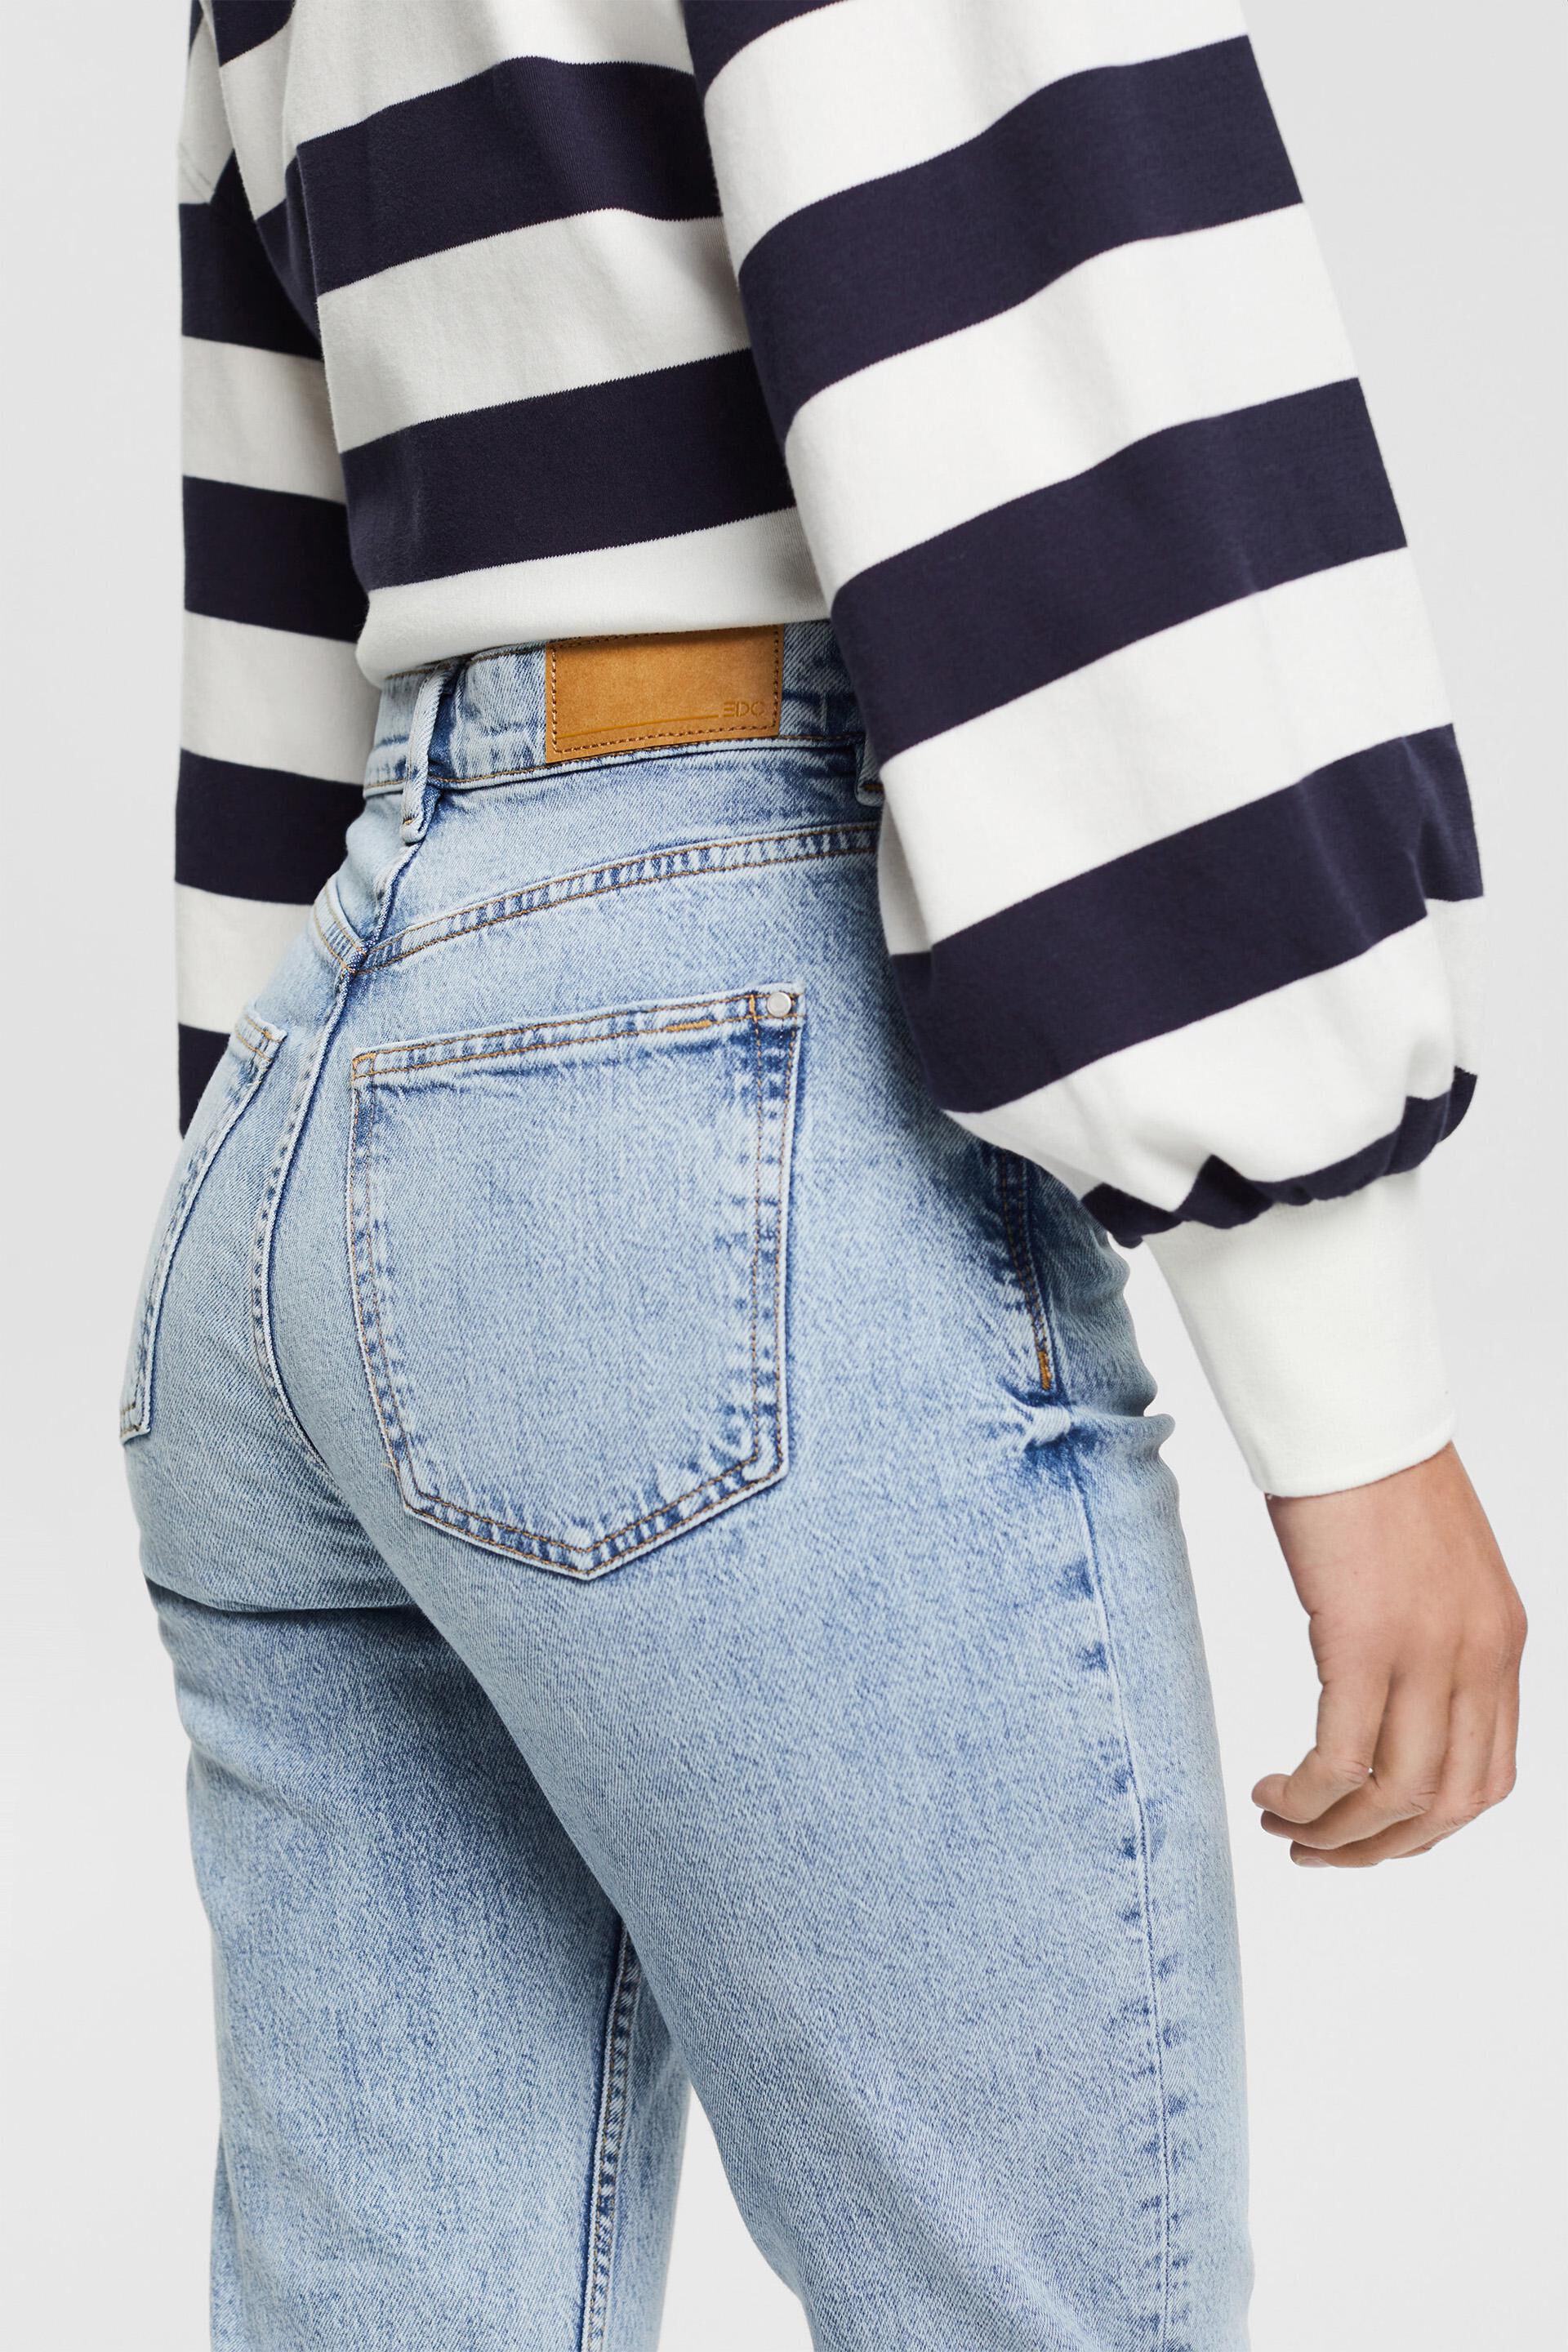 discount 67% Da trends capri jeans WOMEN FASHION Jeans Capri jeans Print White 42                  EU 